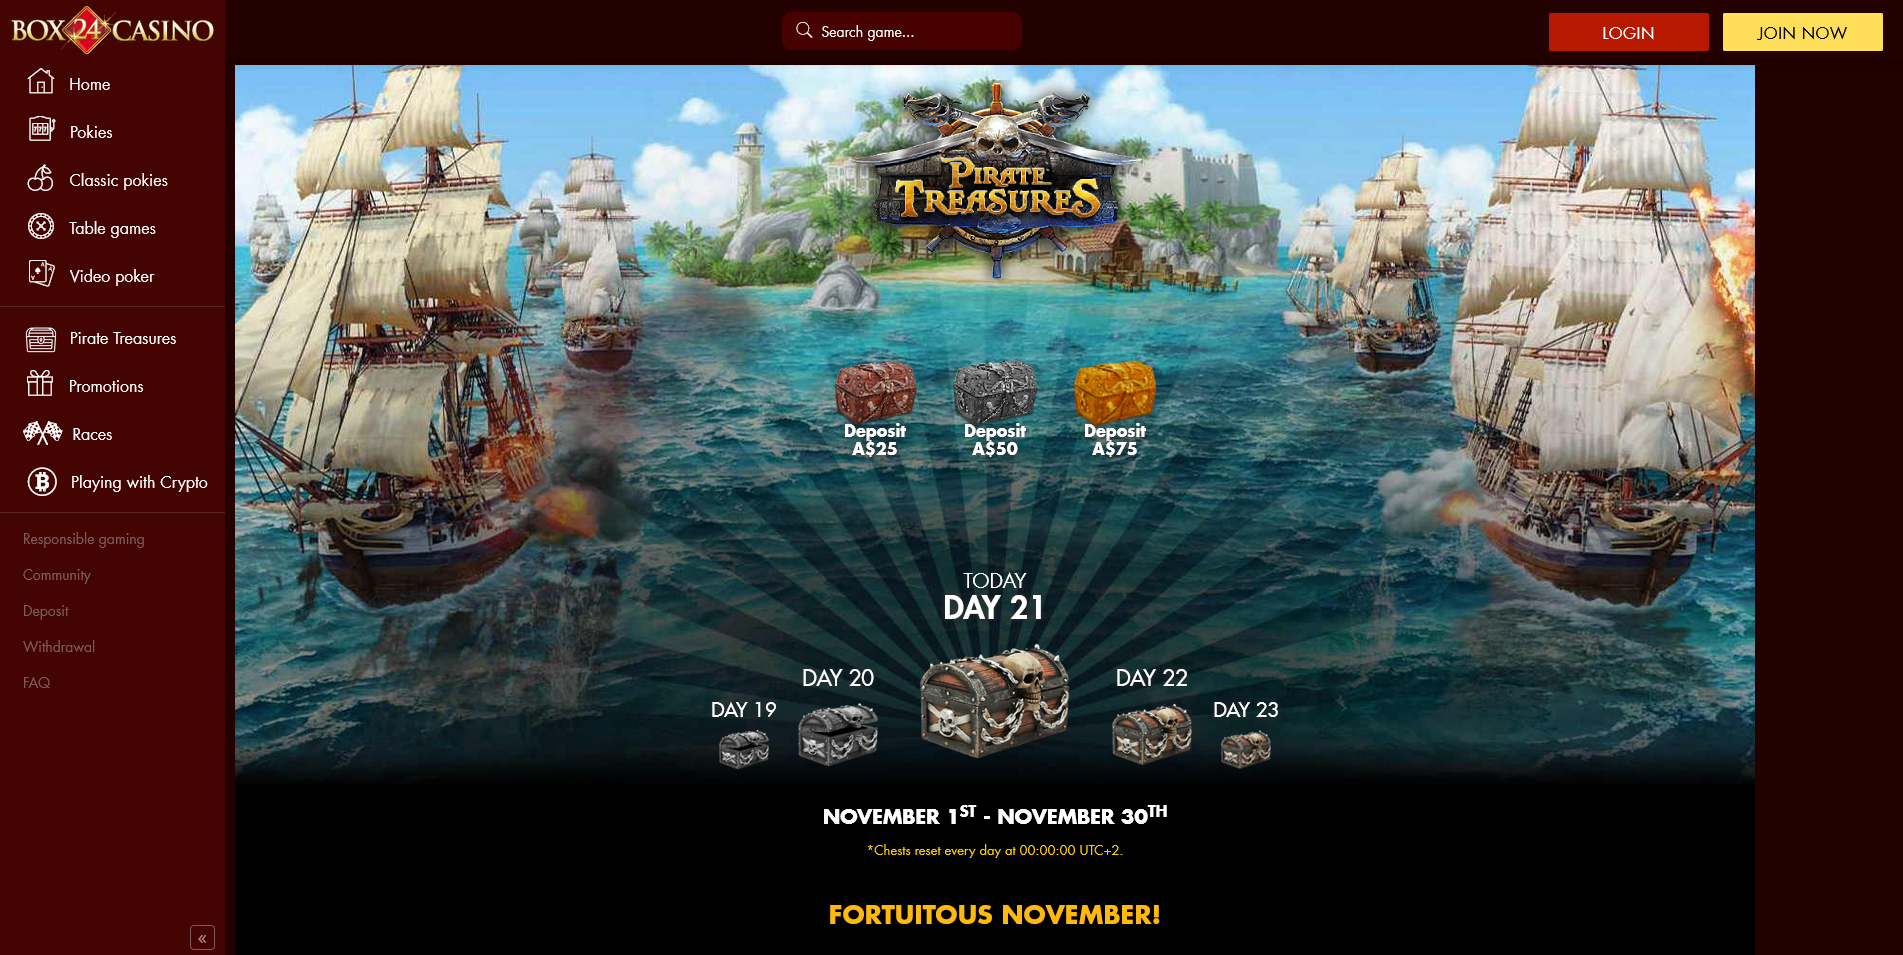 Screenshot of the Box 24 Casino treasures page